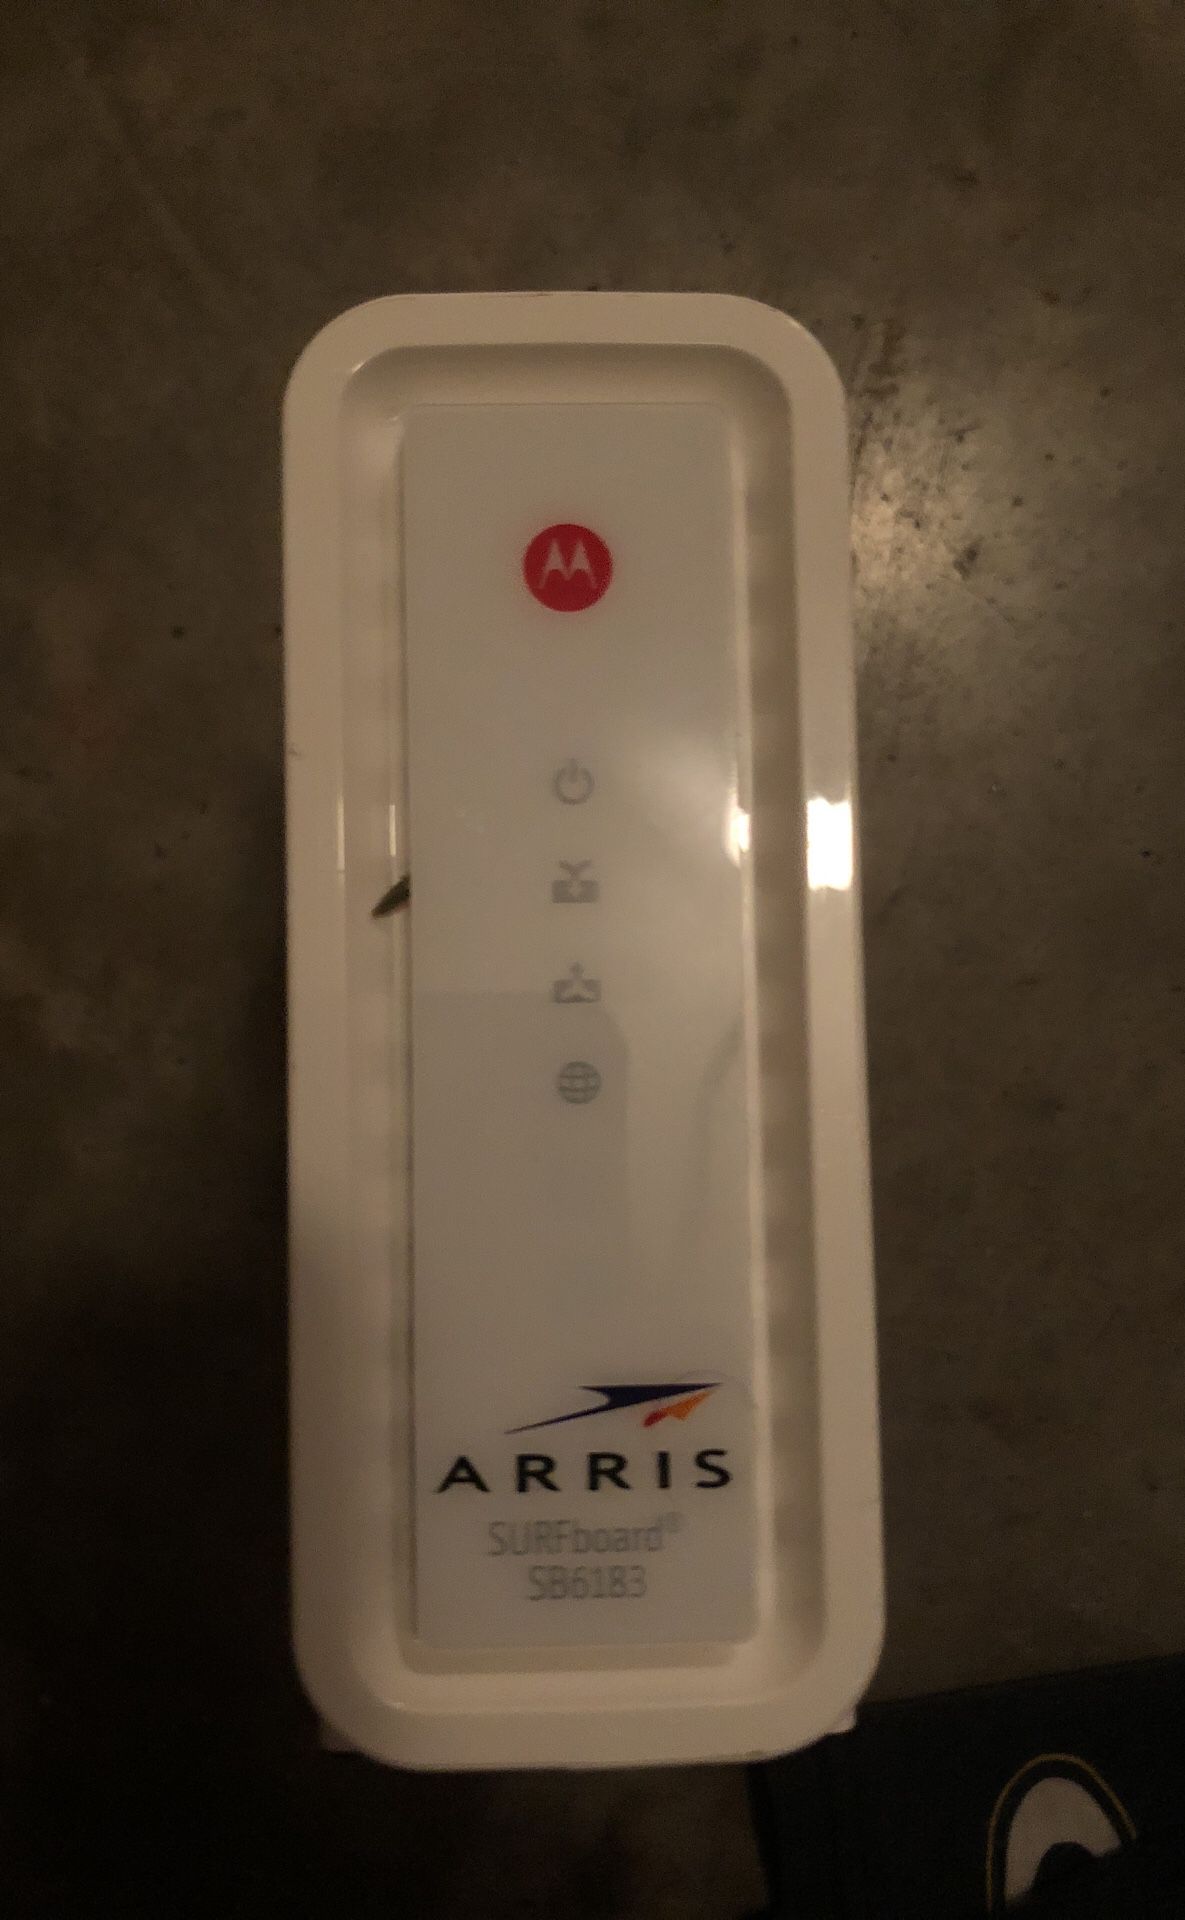 Arris modem surfboard sb6183